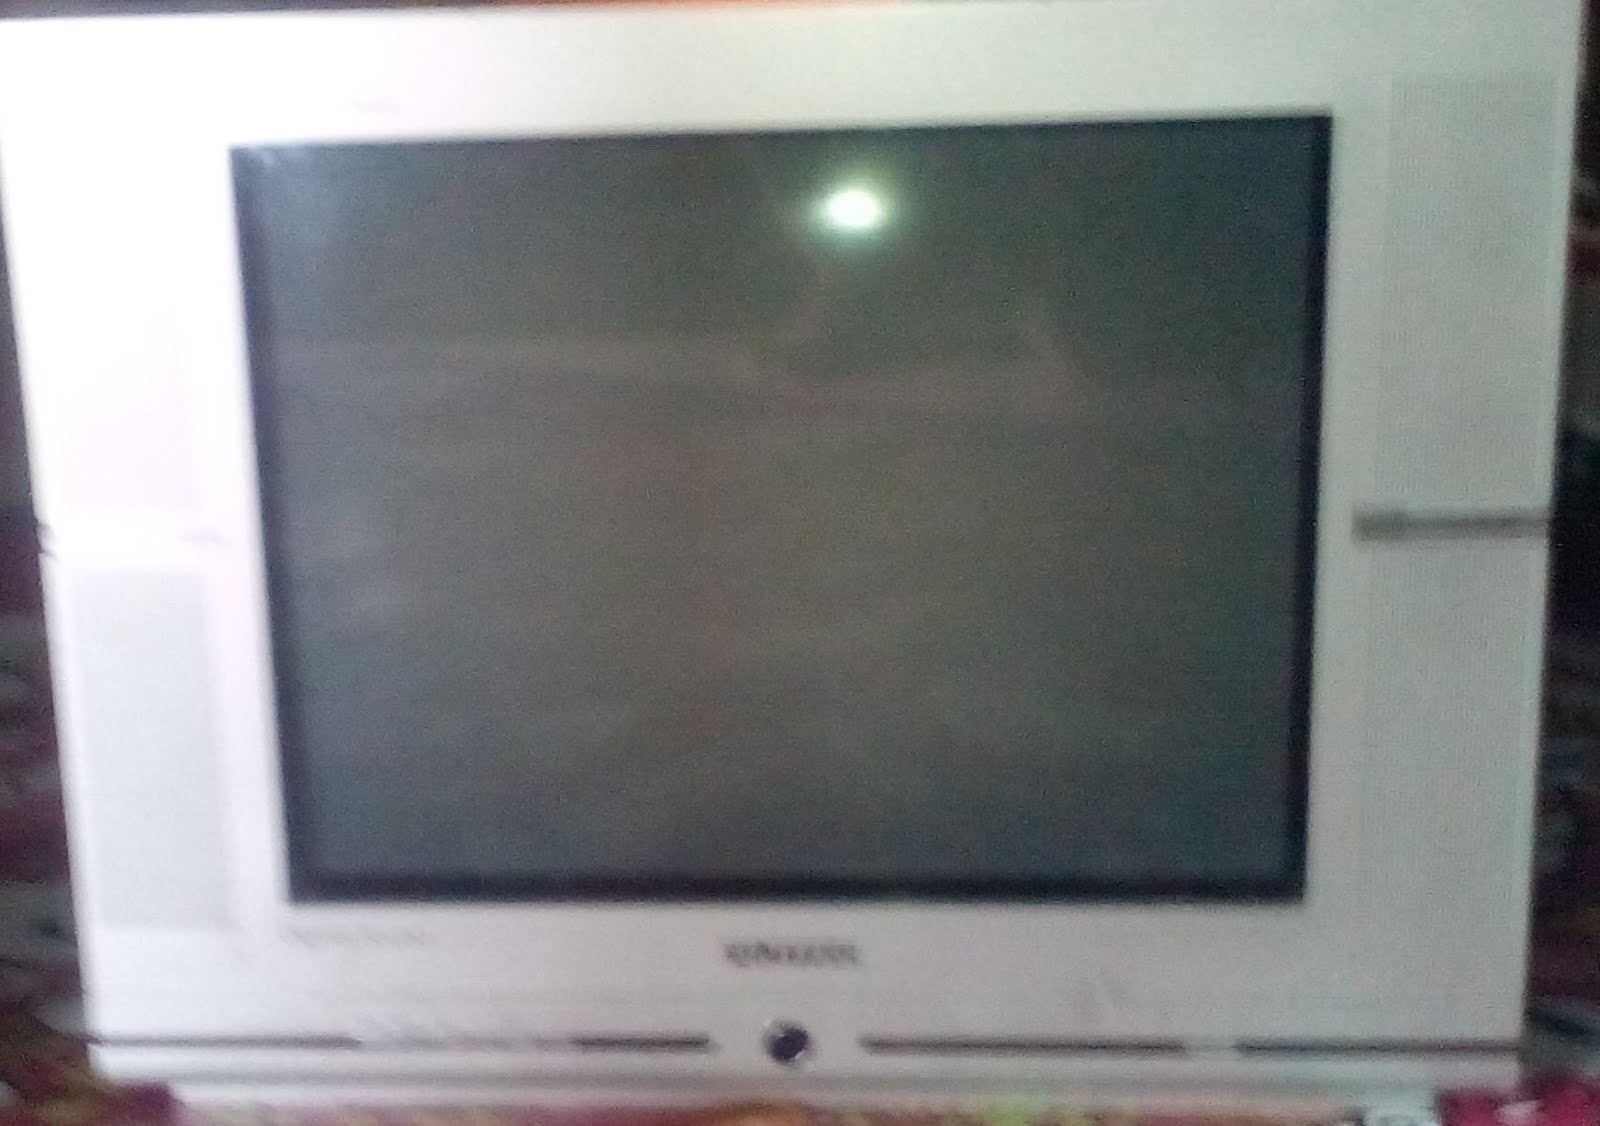 Tv Fujitec 21 inch